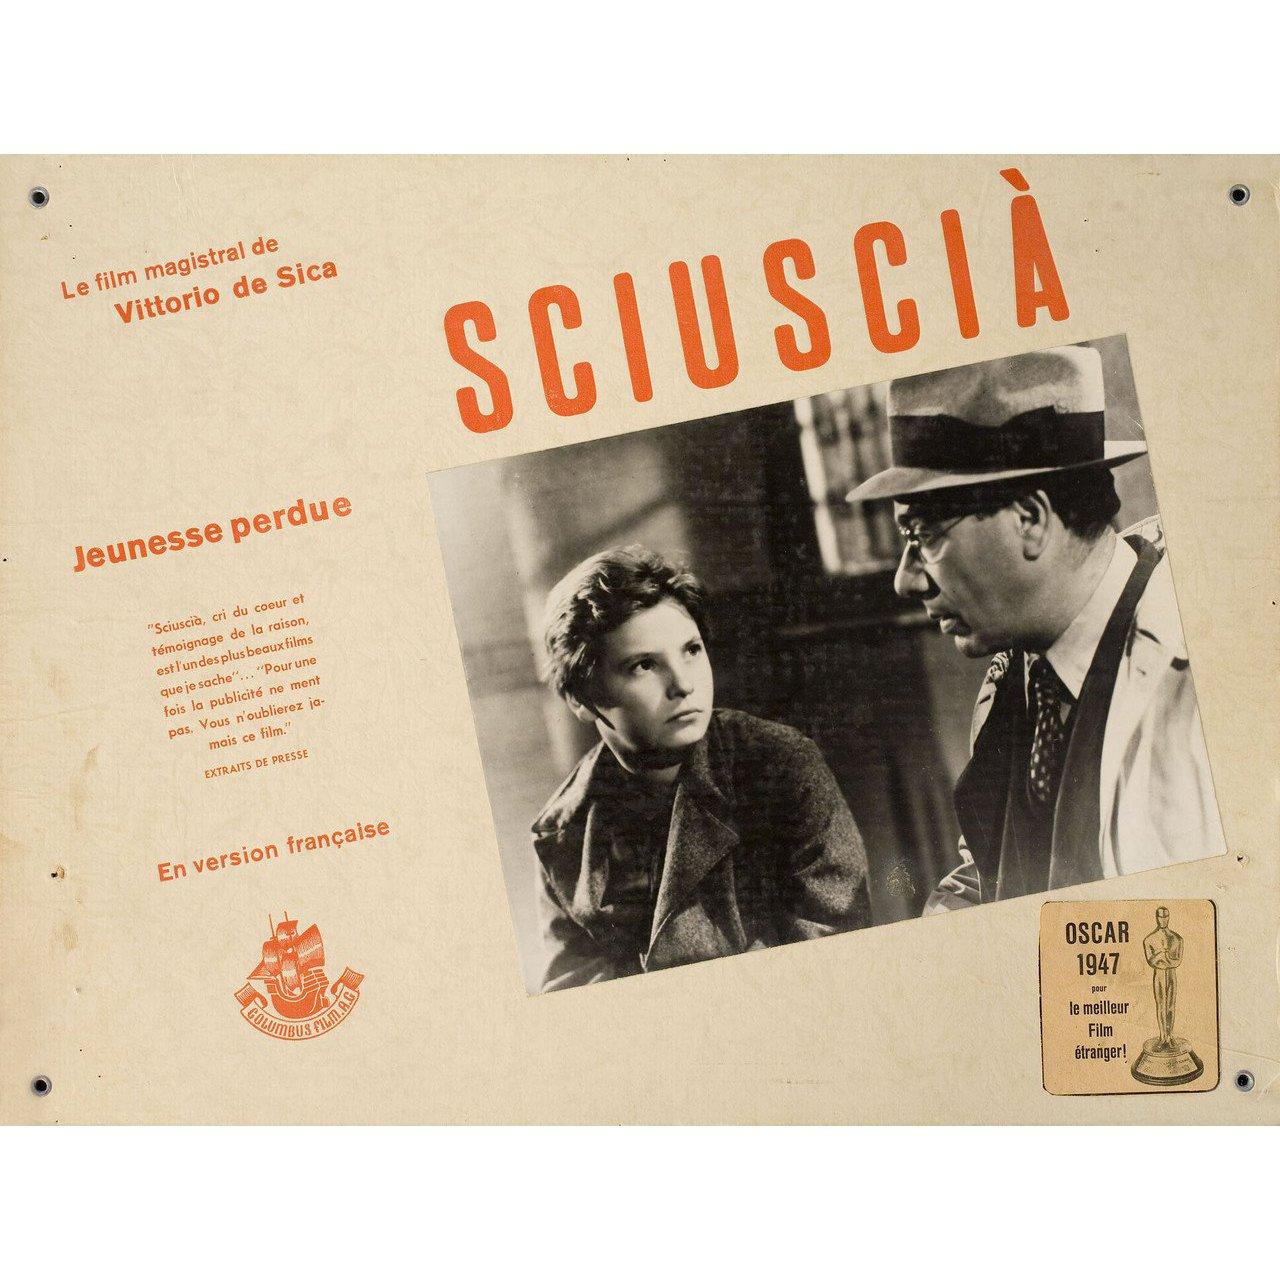 Original 1946 Swiss scene card for the film “Shoeshine” (Sciuscia) directed by Vittorio De SICA with Franco Interlenghi / Rinaldo Smordoni / Annielo Mele / Bruno Ortenzi. Very good-fine condition. Please note: the size is stated in inches and the